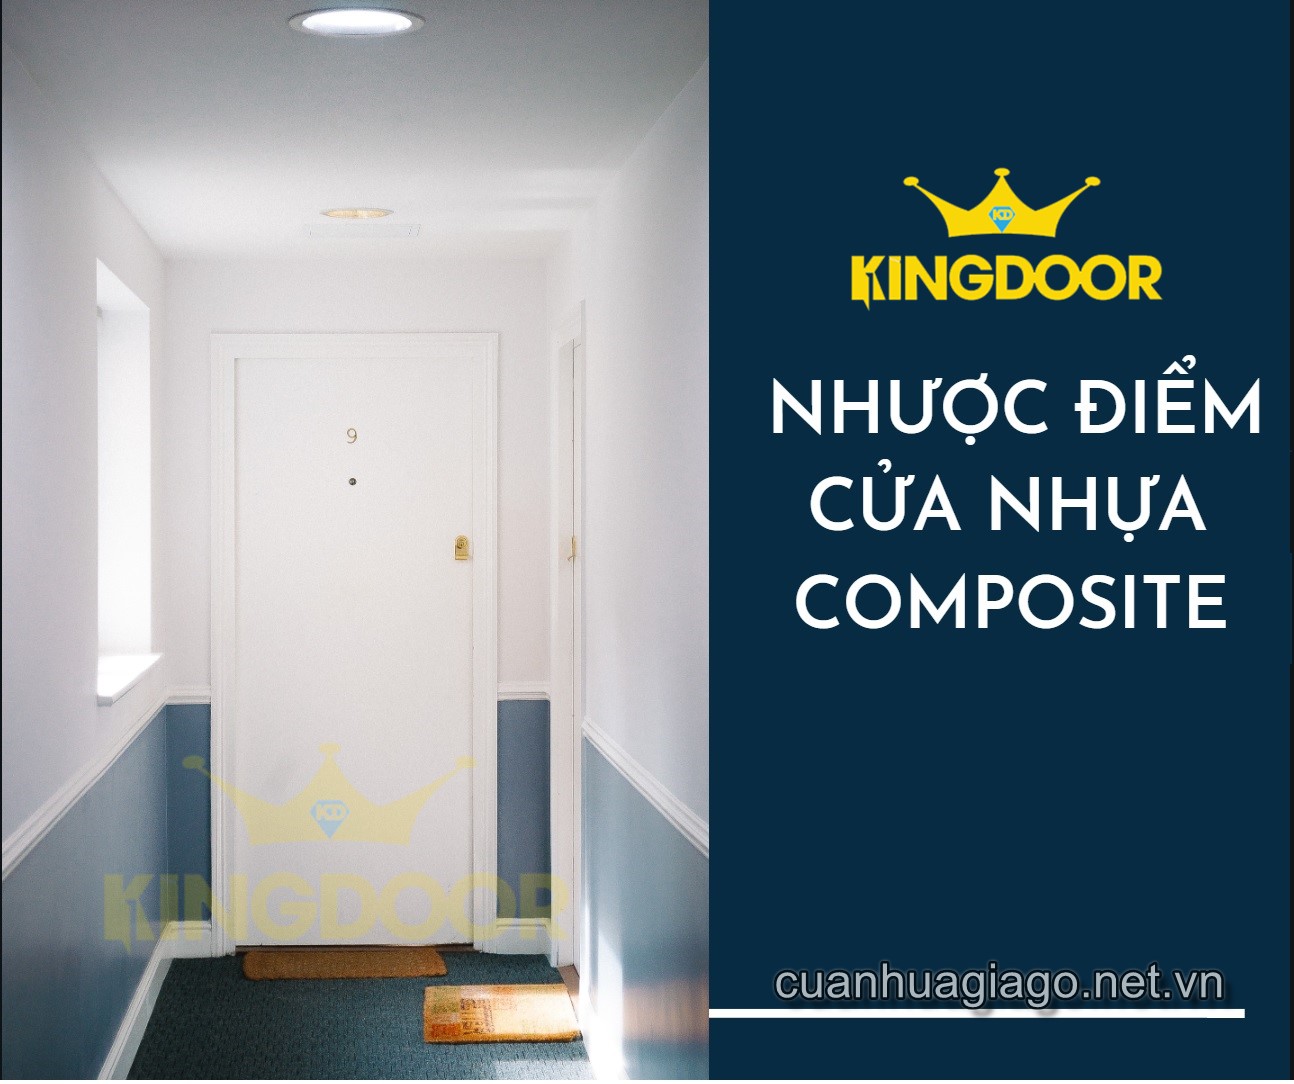 nhuoc-diem-cua-nhua-composite-1